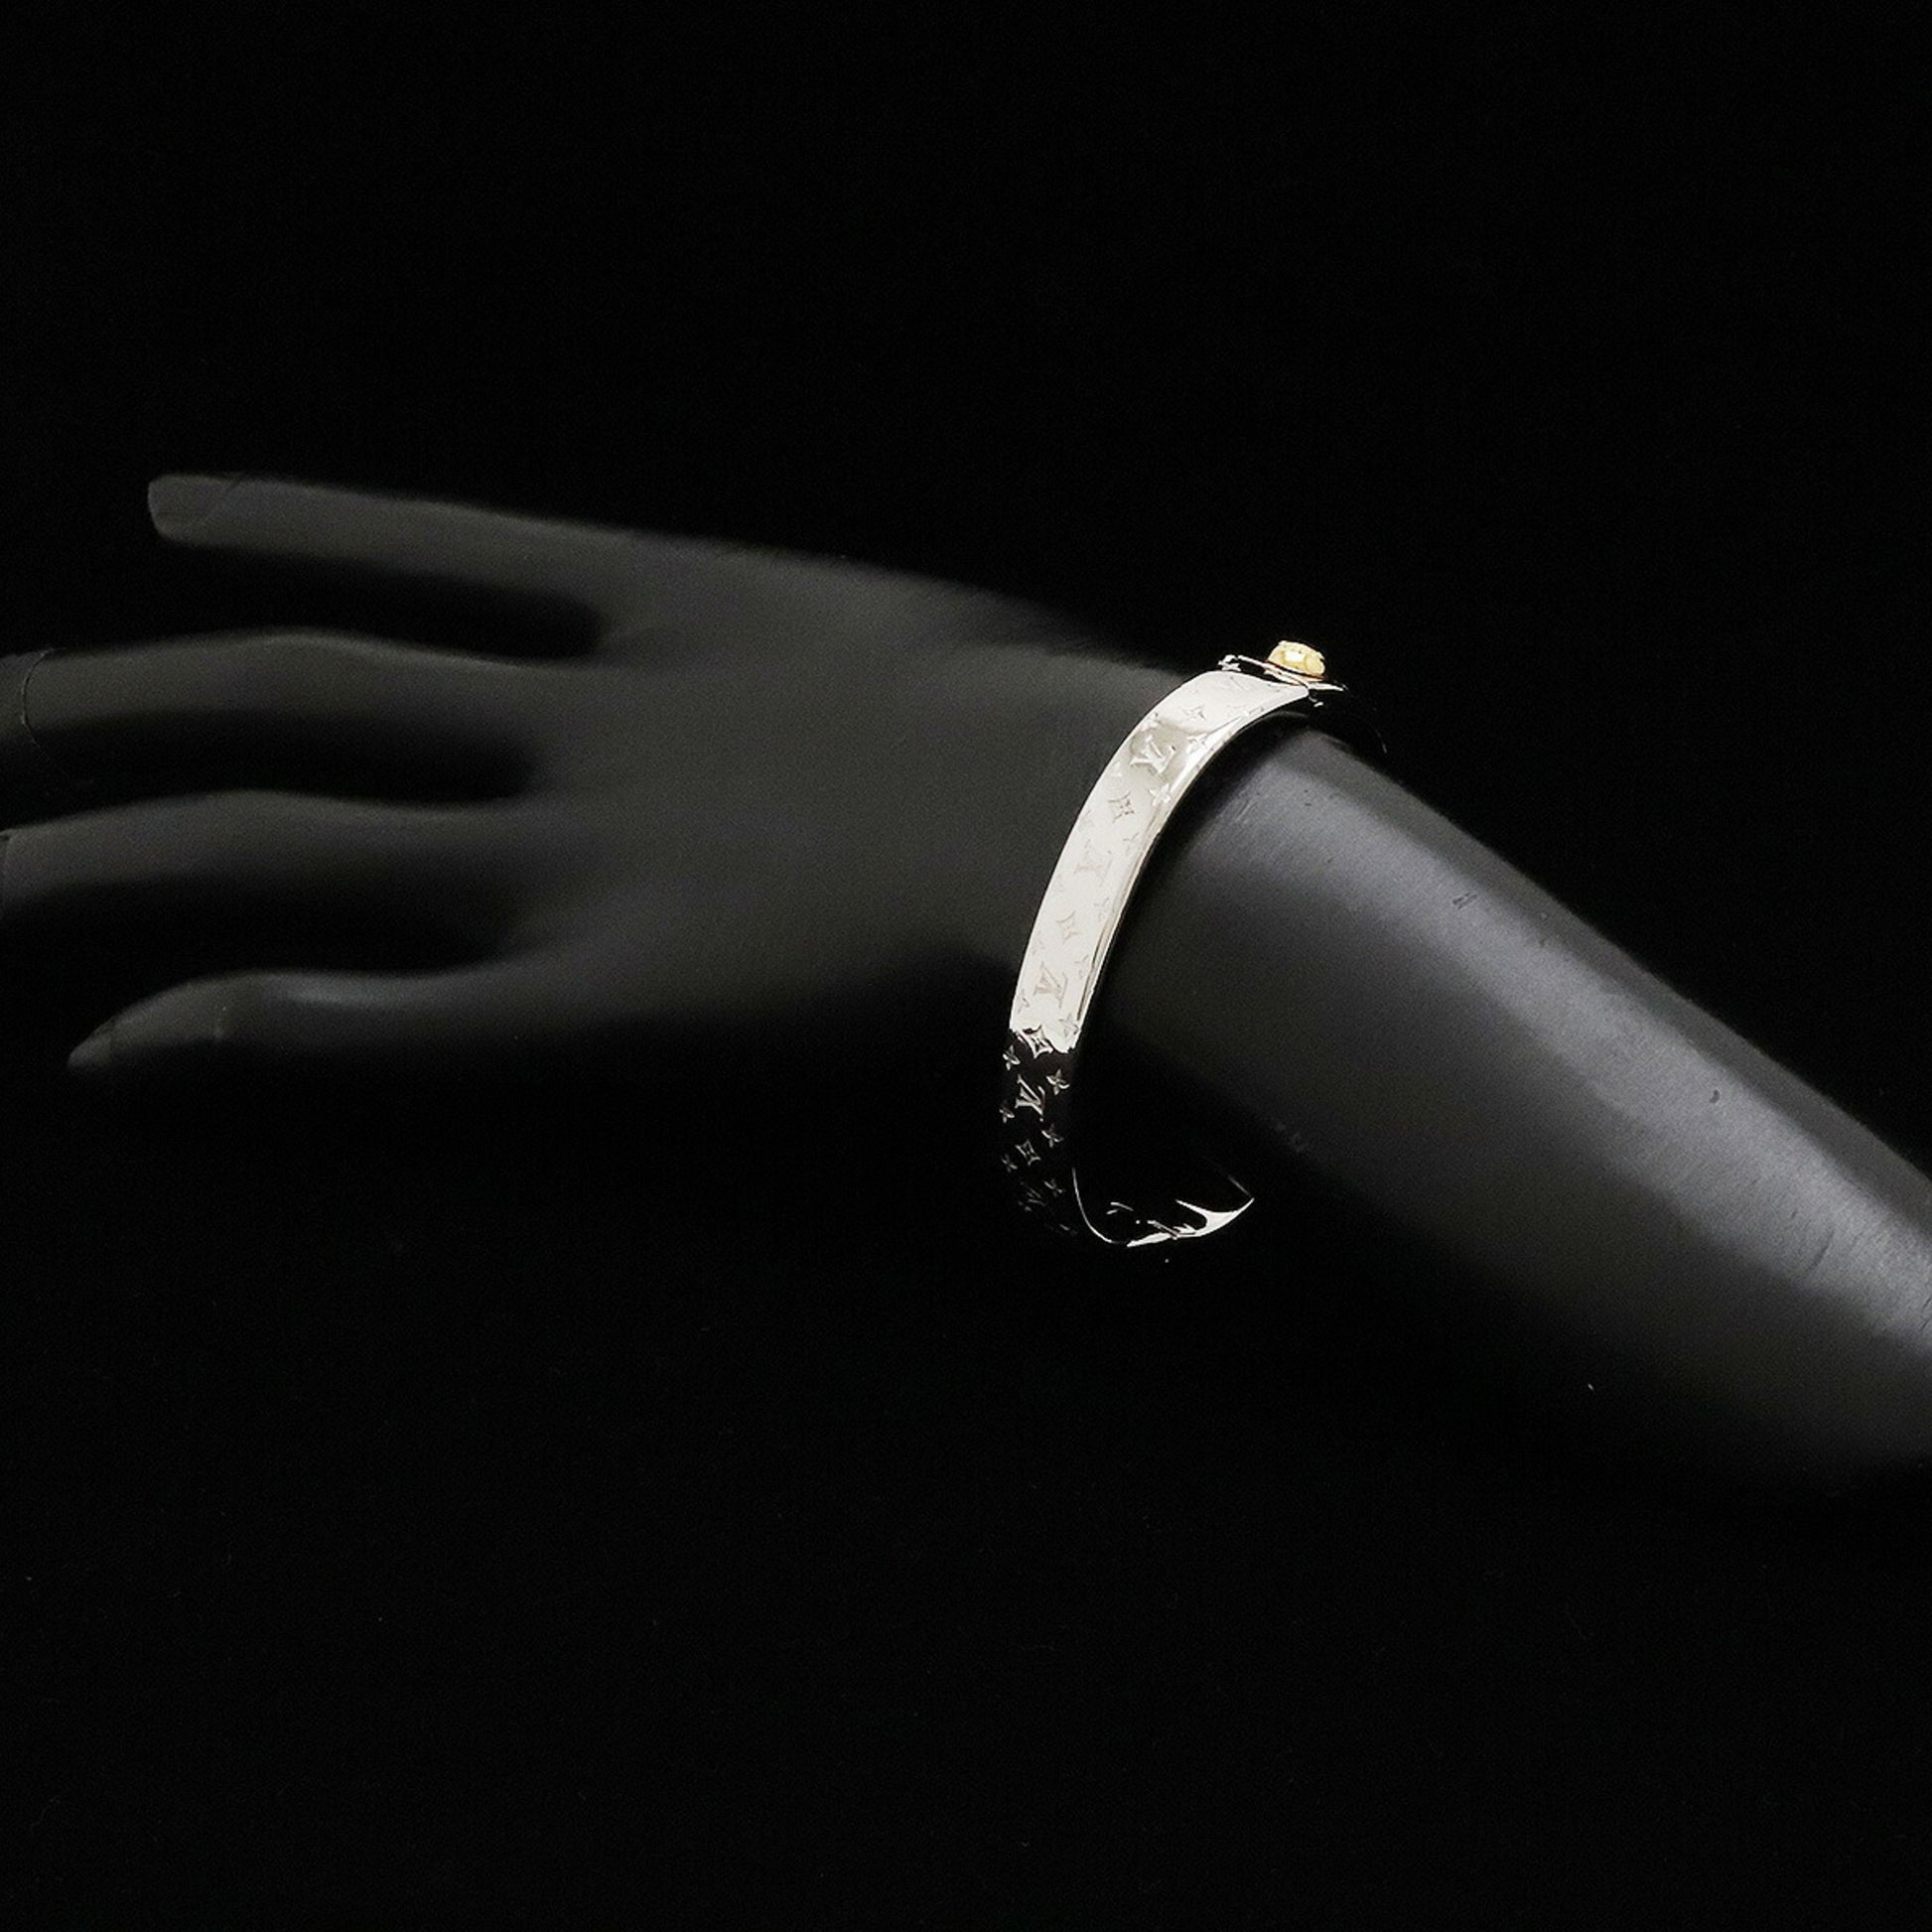 Shop Louis Vuitton Nanogram cuff (M00253, M00251, M00249) by